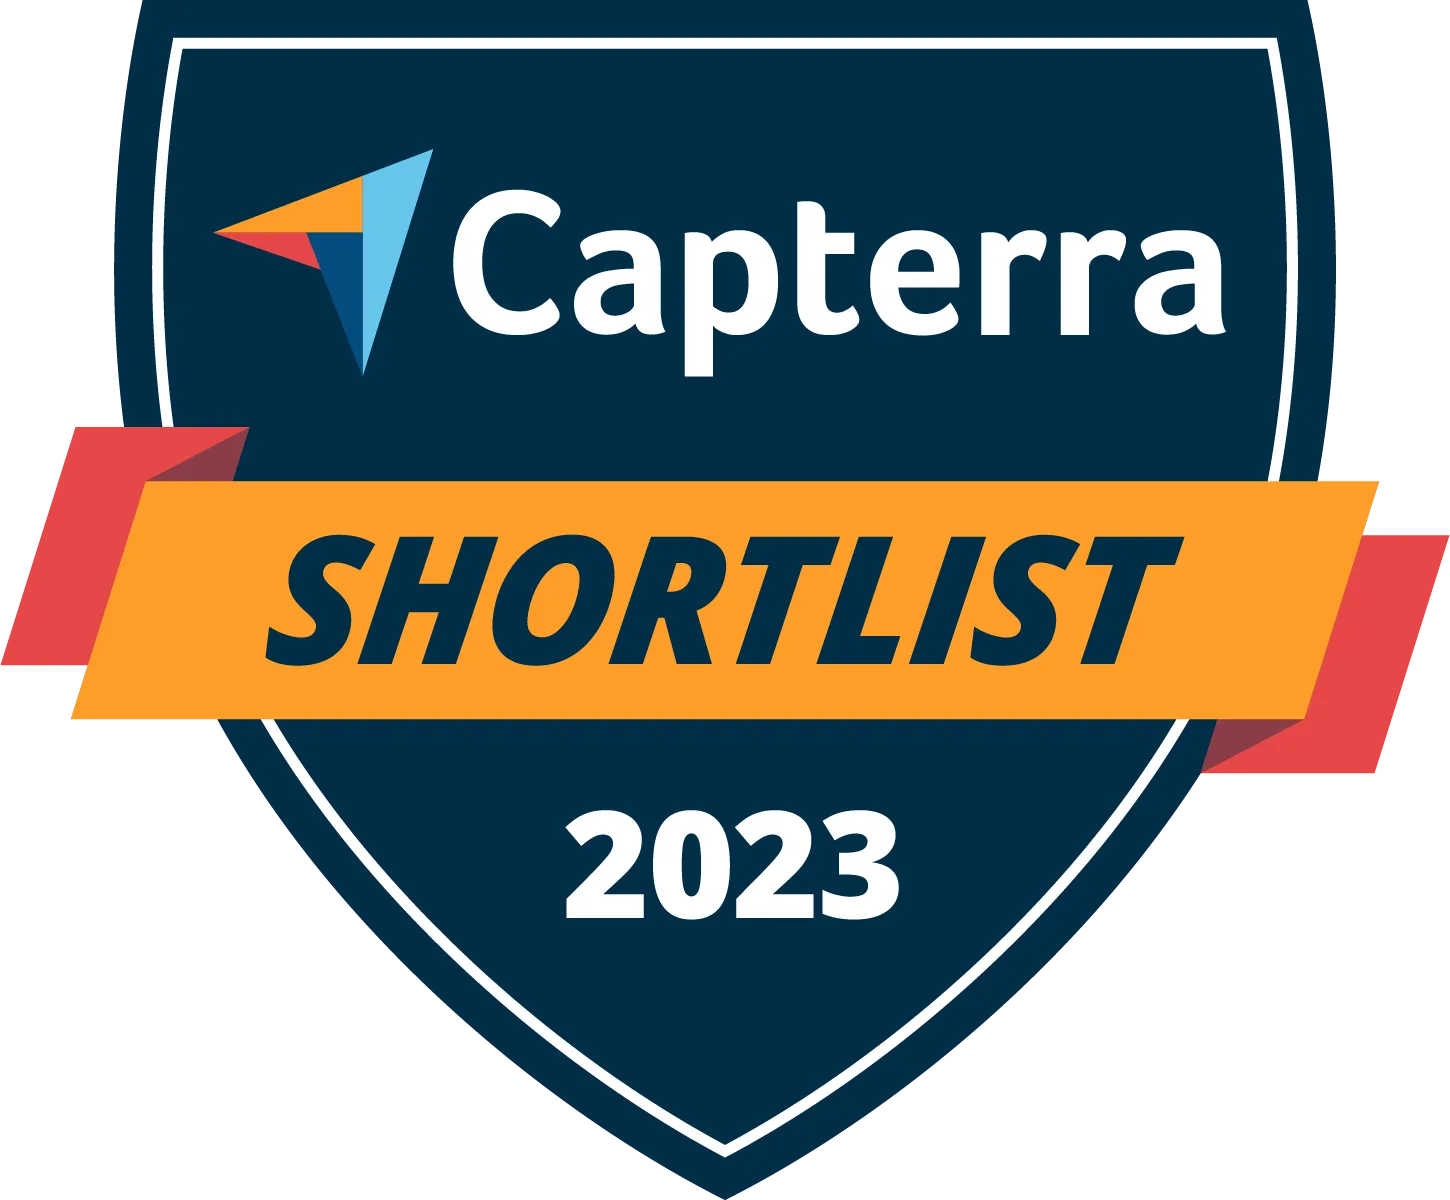 Capterra: Shortlist 2023 for File Sharing Category